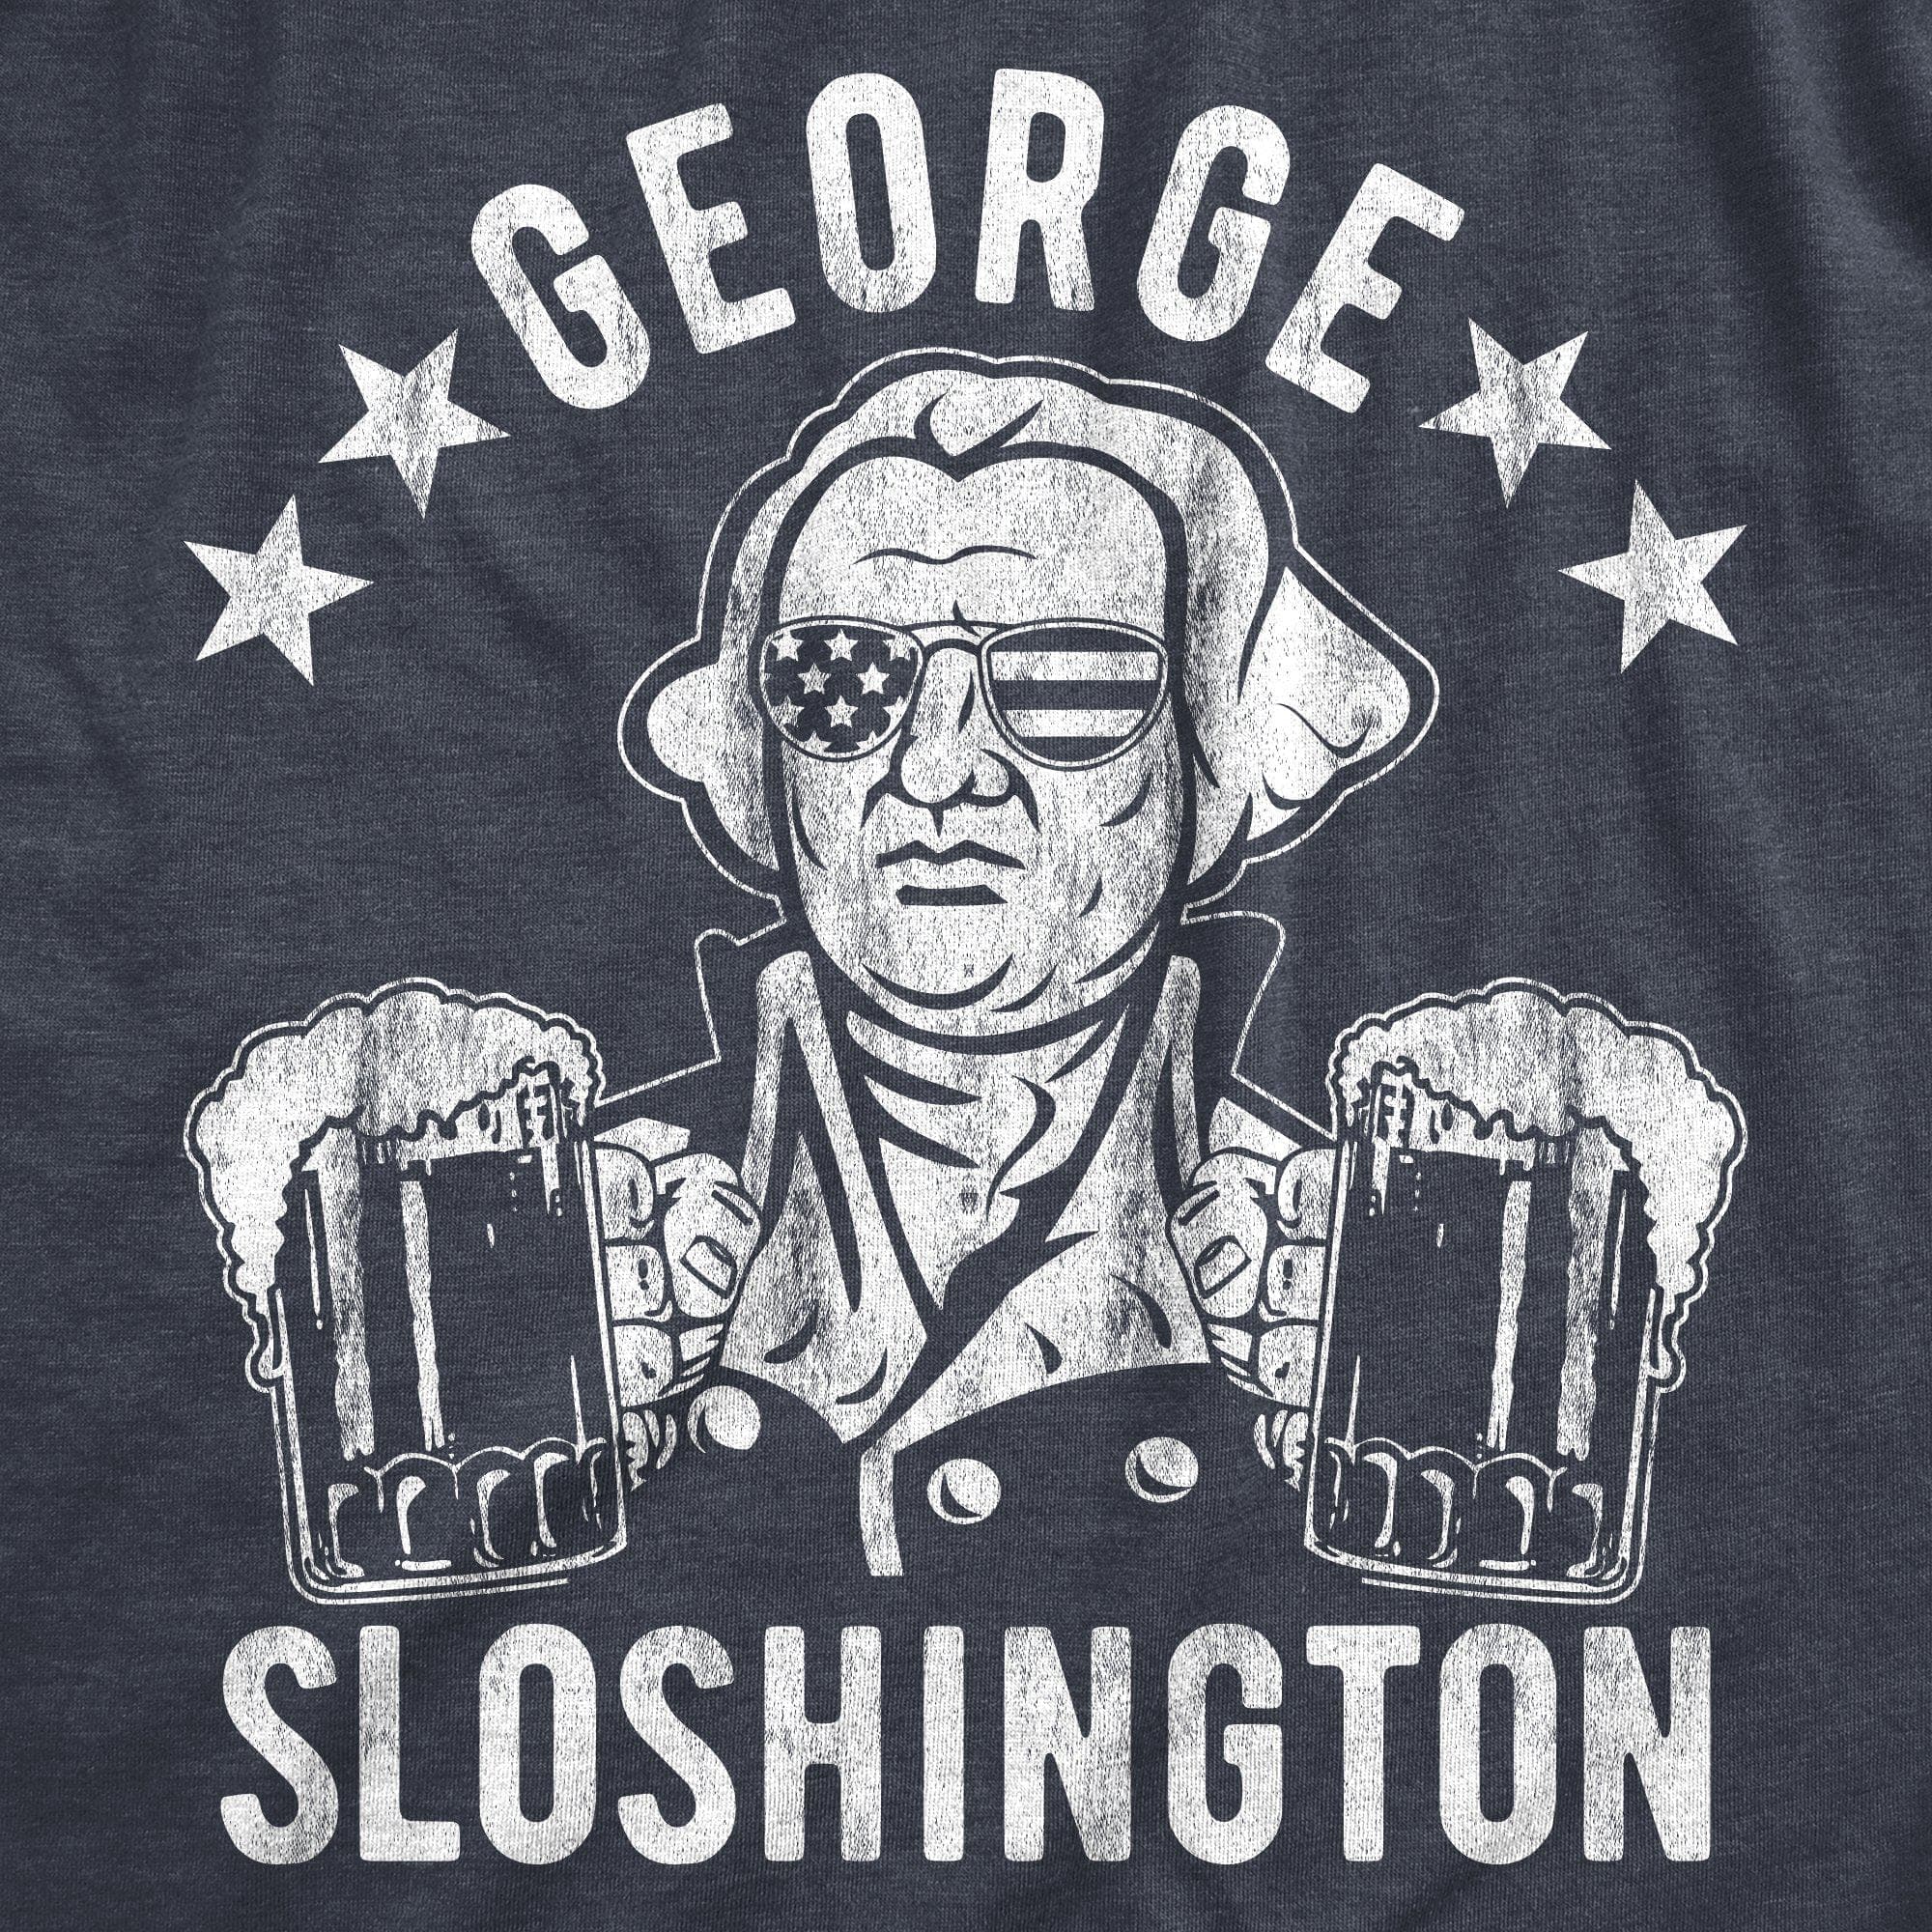 George Sloshington Men's Tshirt - Crazy Dog T-Shirts